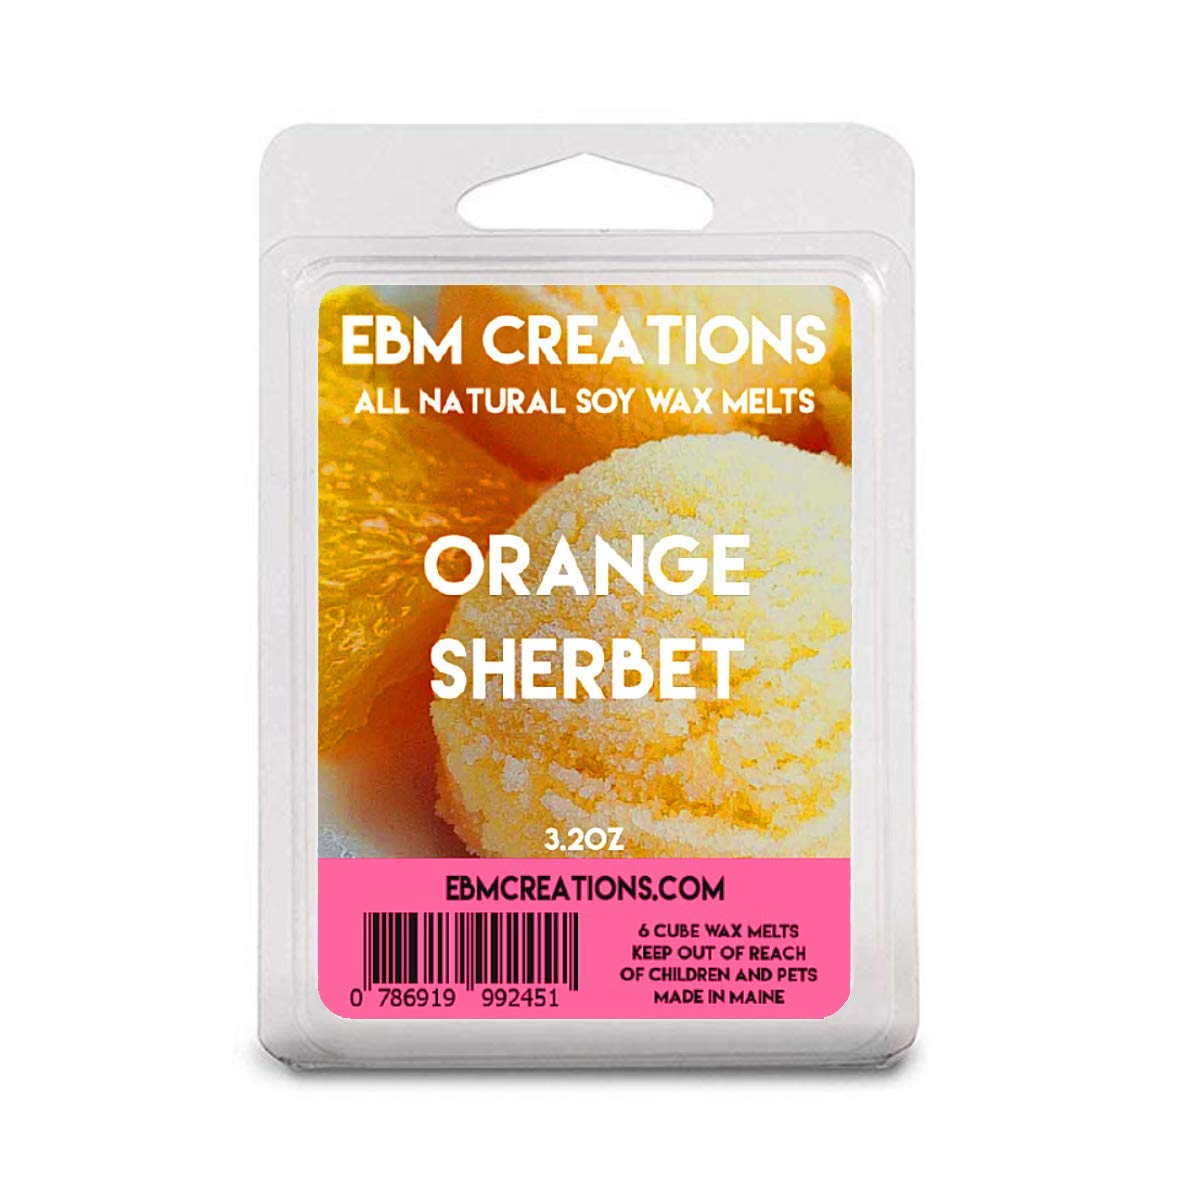 Orange Sherbet - 3.2 oz Clamshell